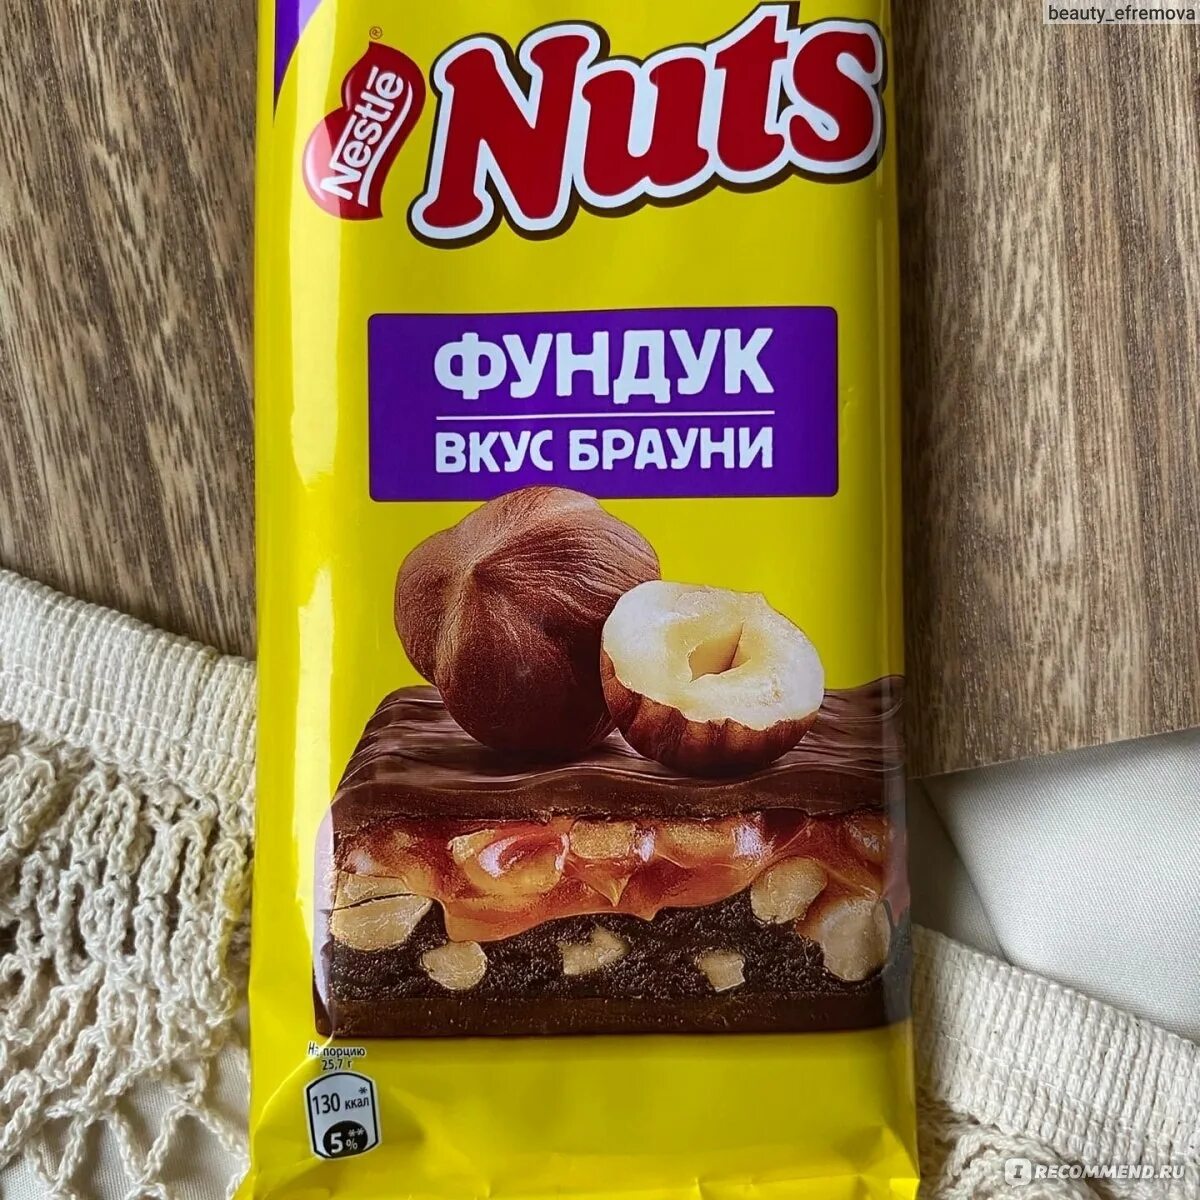 Вкус брауни. Нестле натс. Шоколад Nuts XXL. Nuts Брауни. Nestle Nuts вкус Брауни.